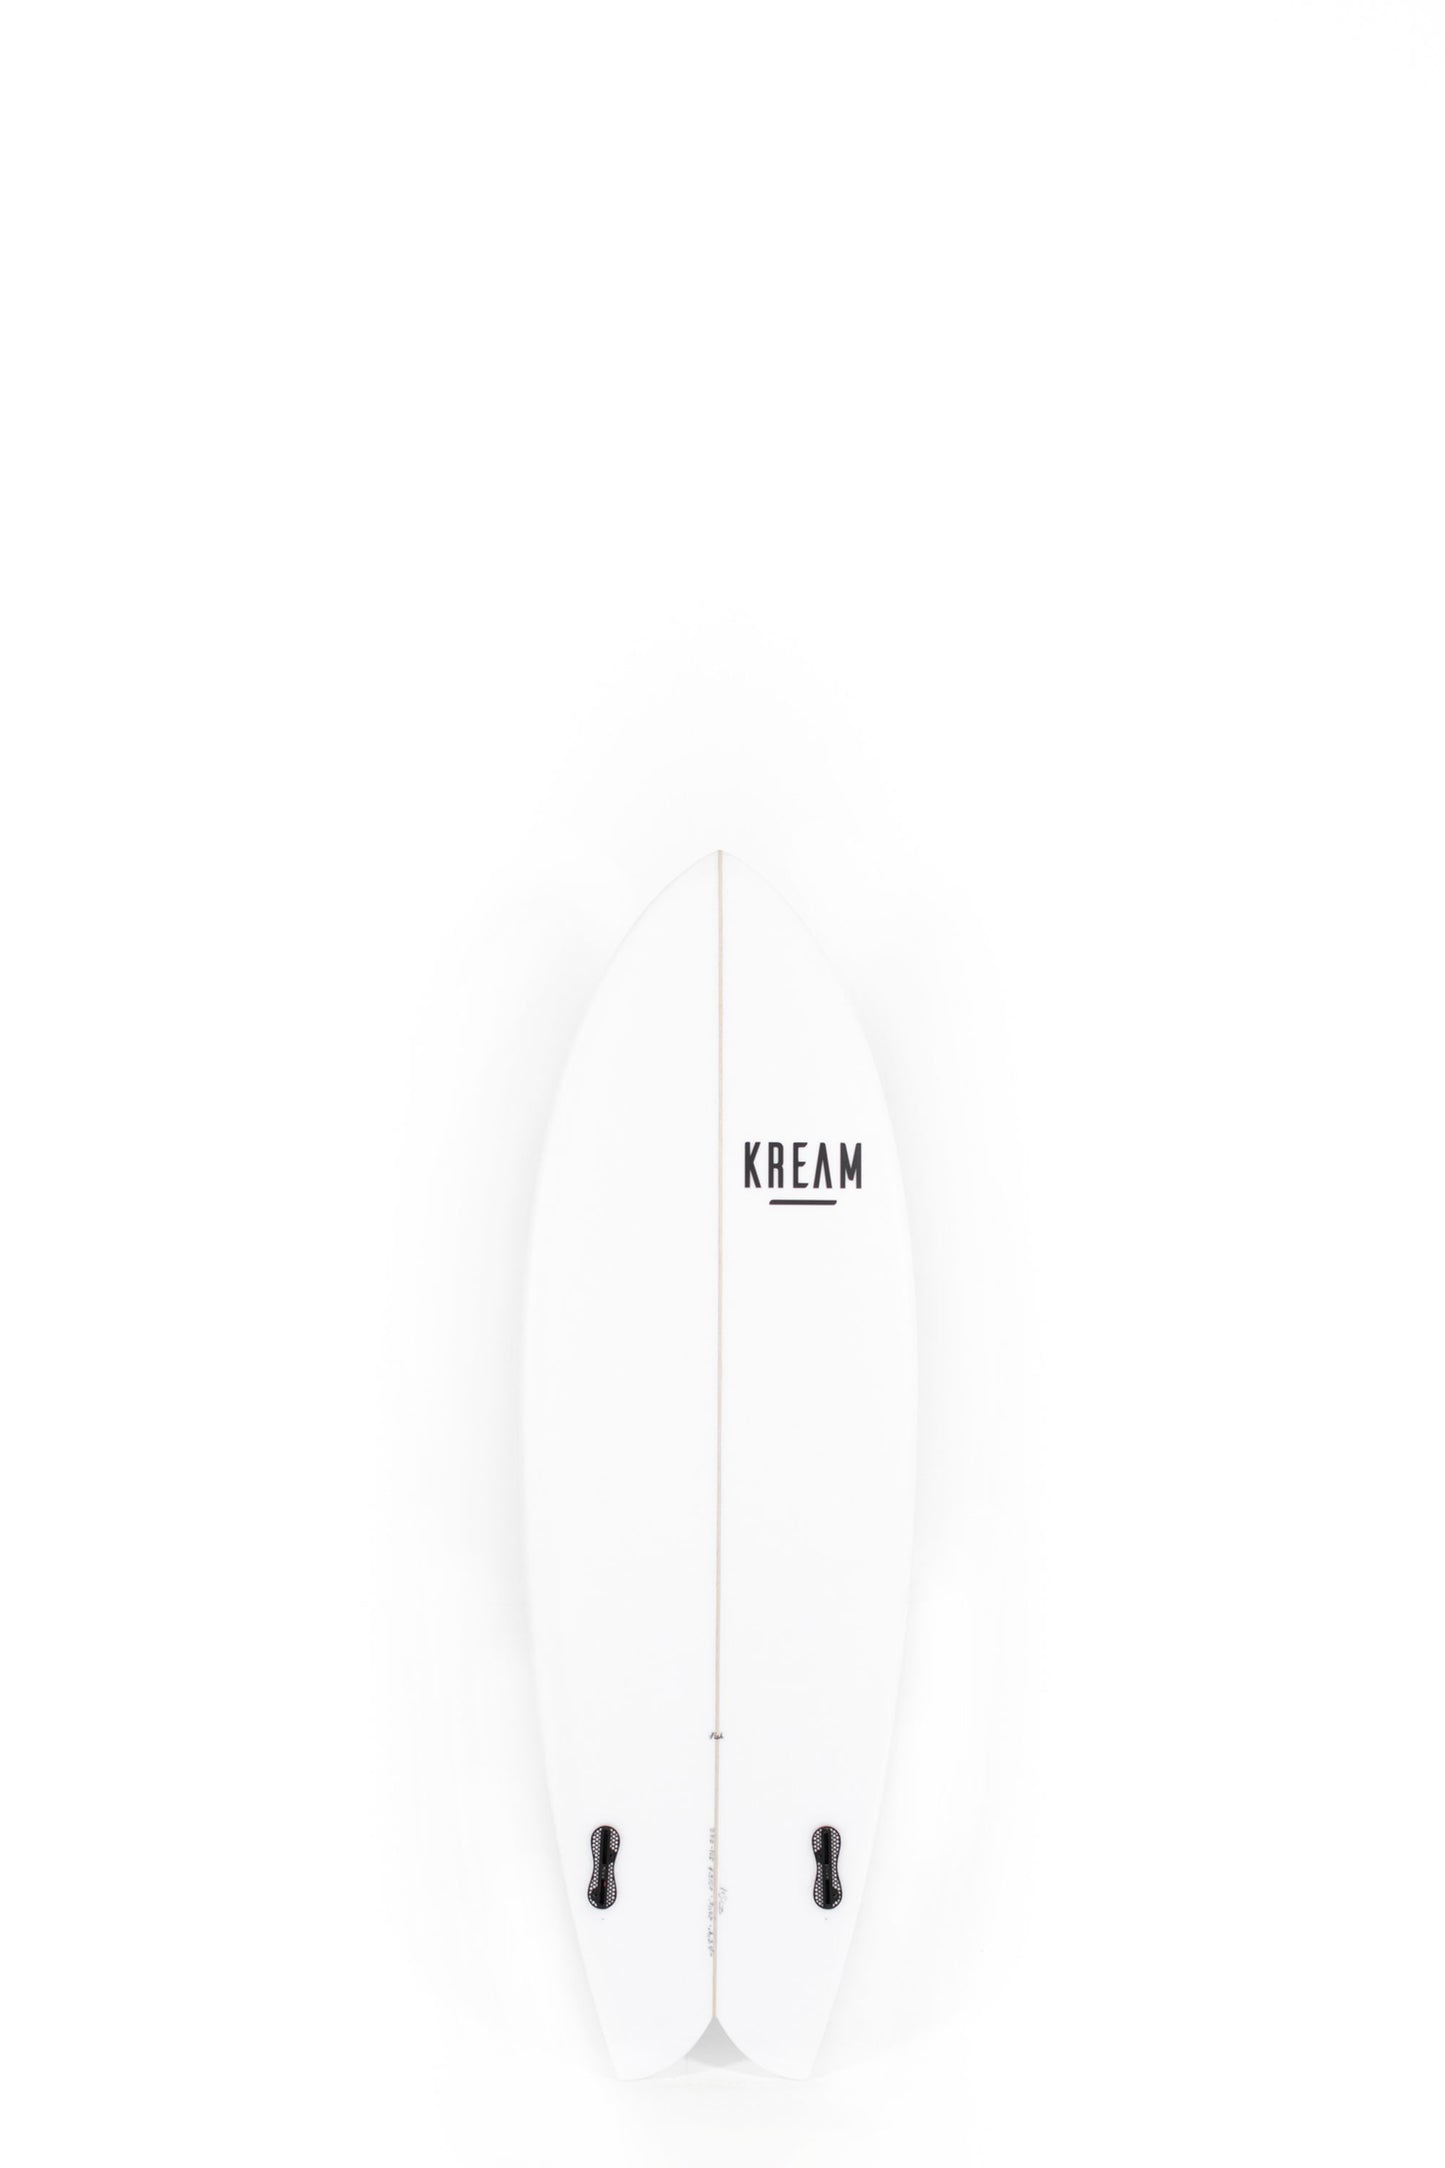 Pukas Surf Shop_Kream Surfboards - FISH - 5'4" - 20 1/2 - 2 3/8 - 30L